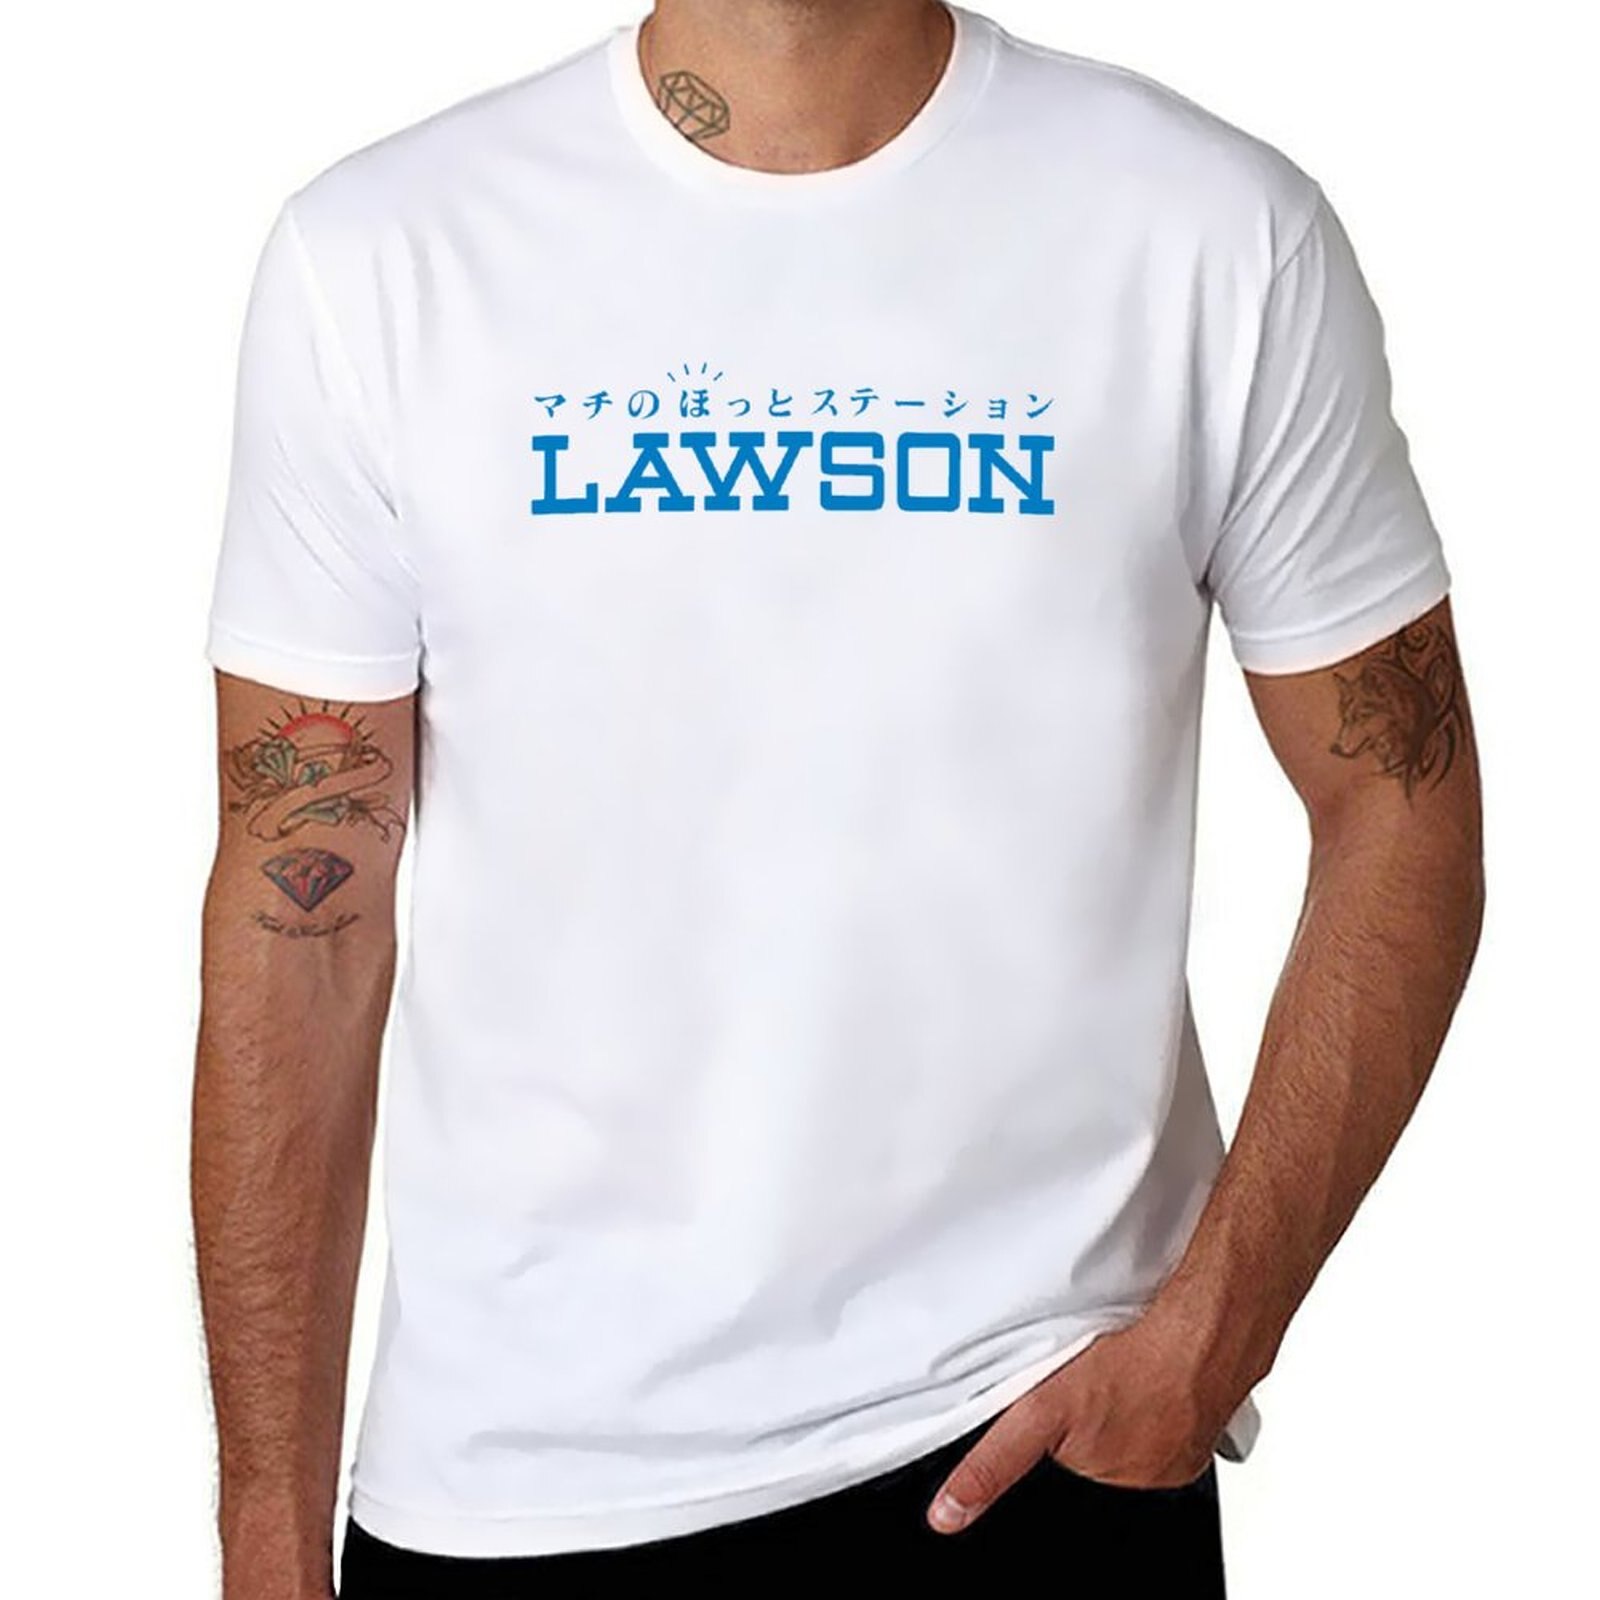 LAWSON 로고 티셔츠, 빈티지 의류, 남성 의류